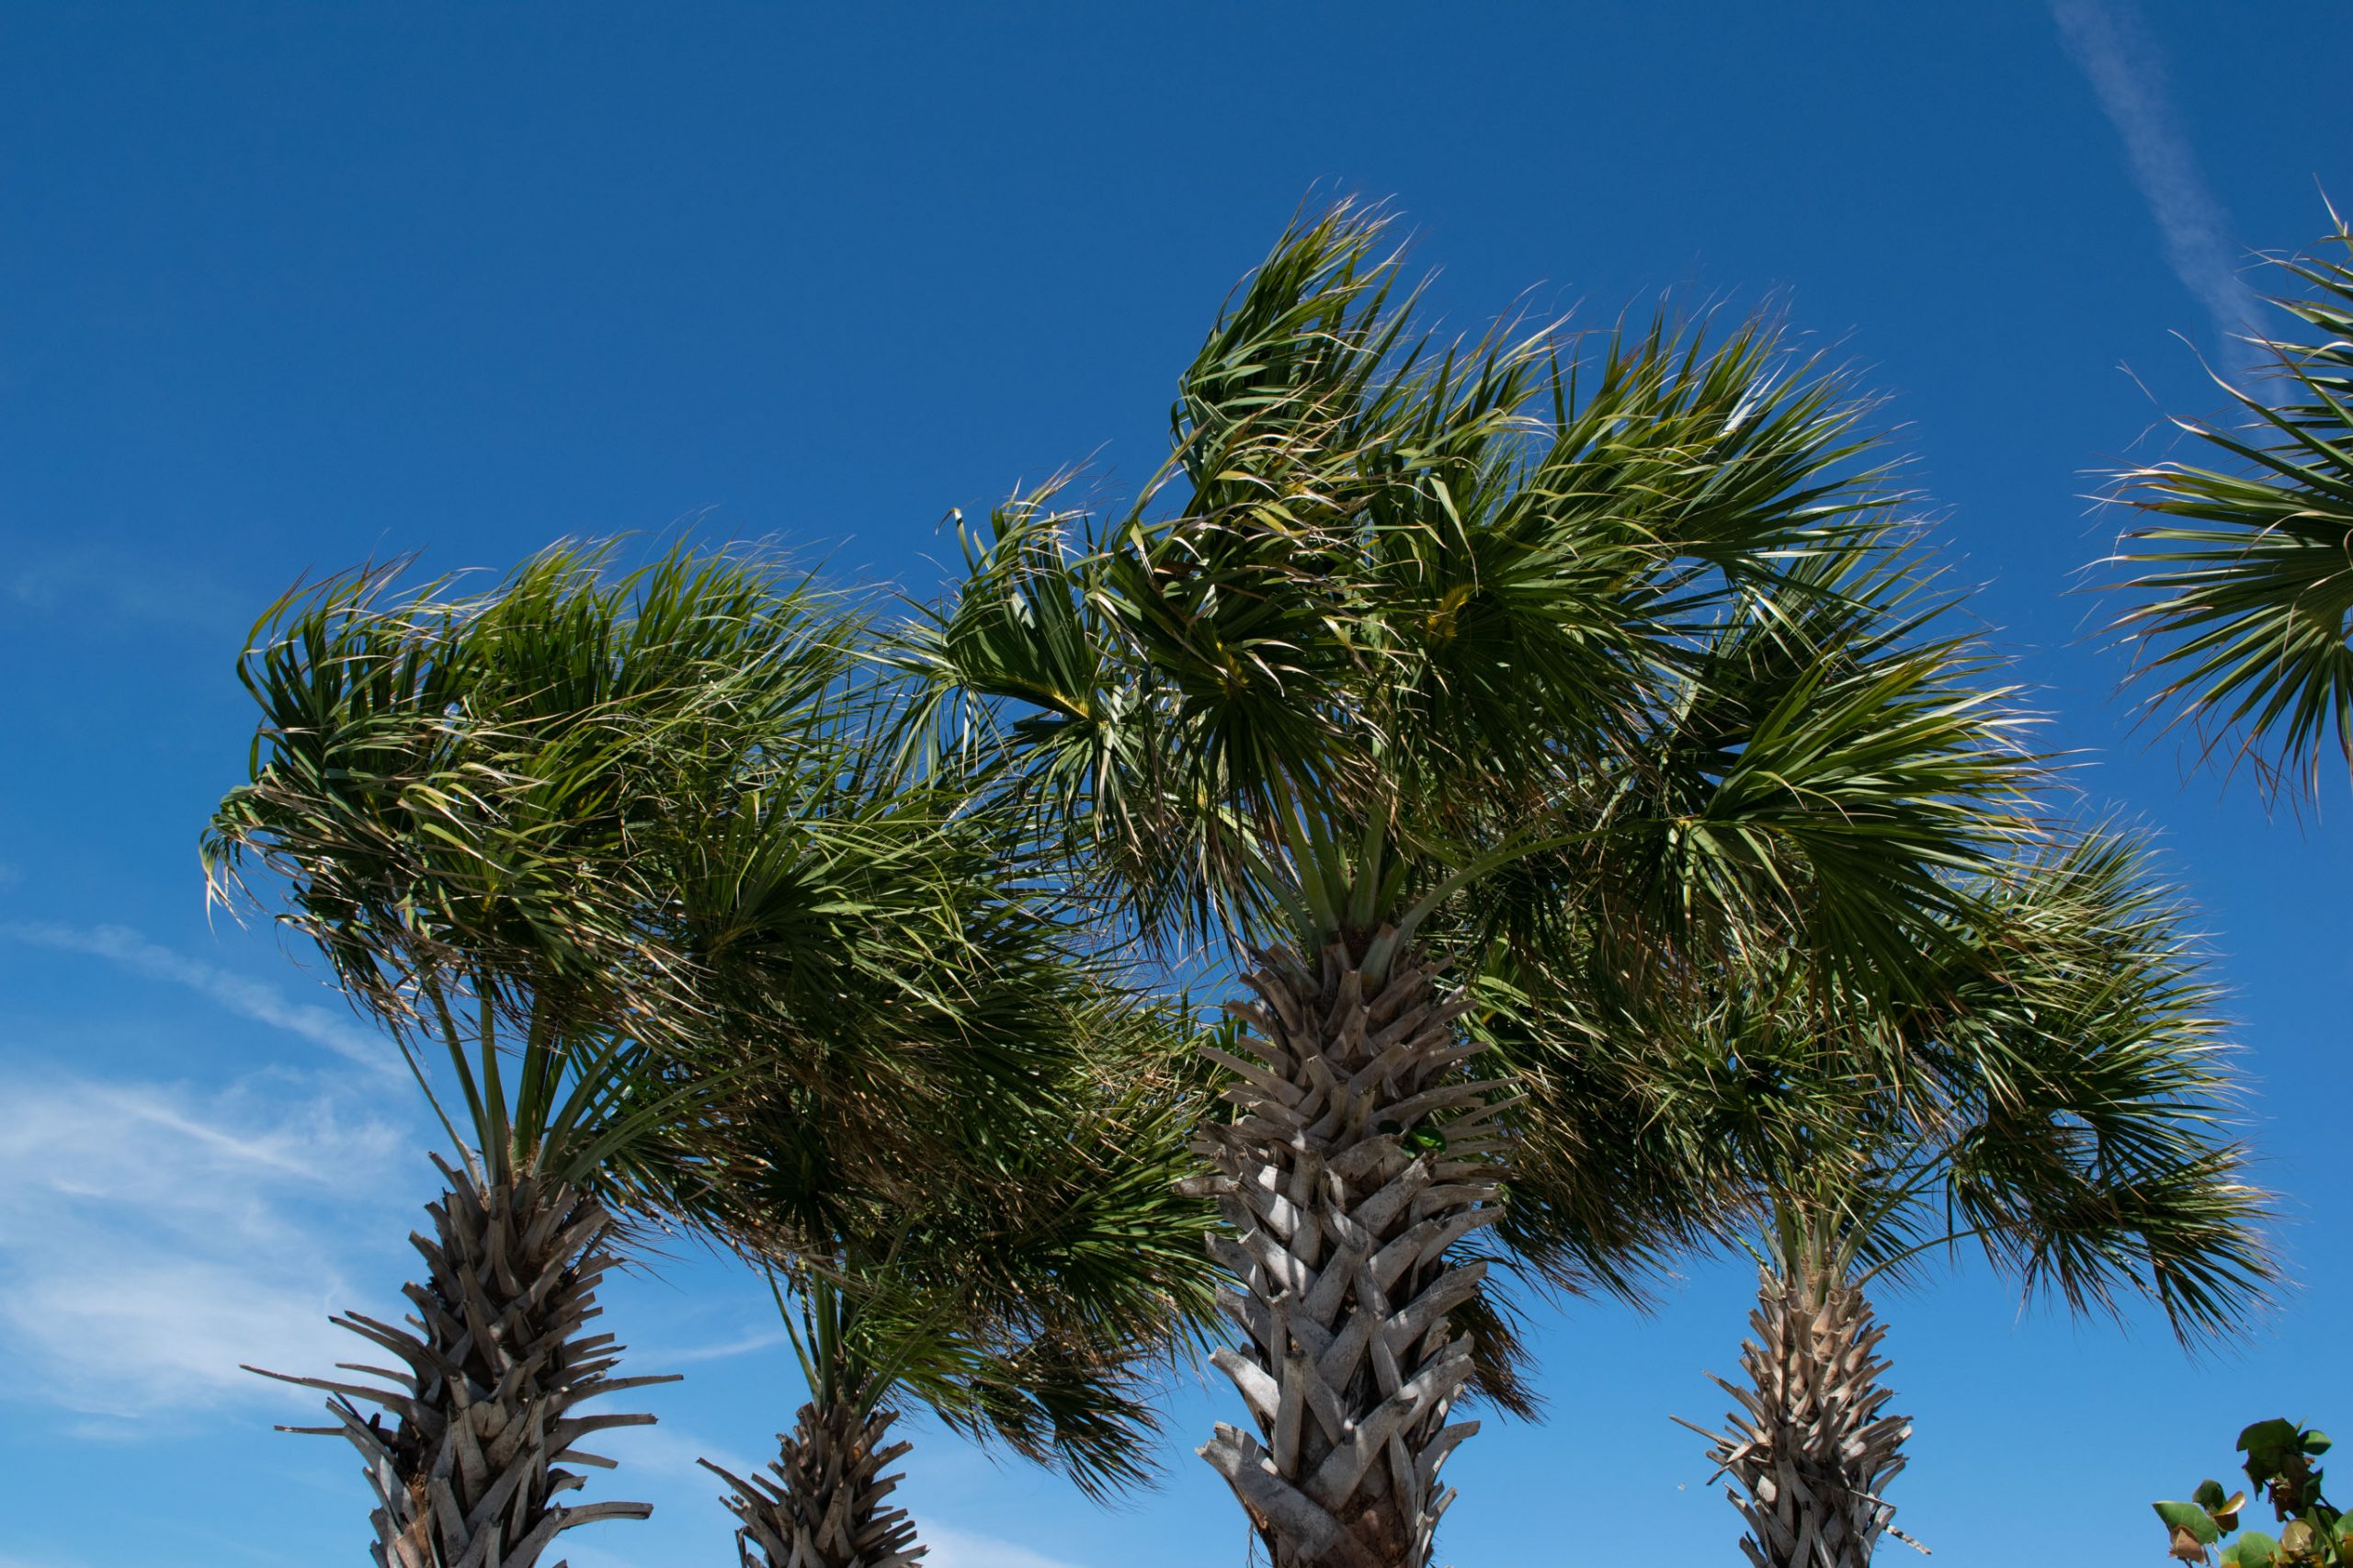 Palm trees in a Florida community. (Photo: Daniel Nee)